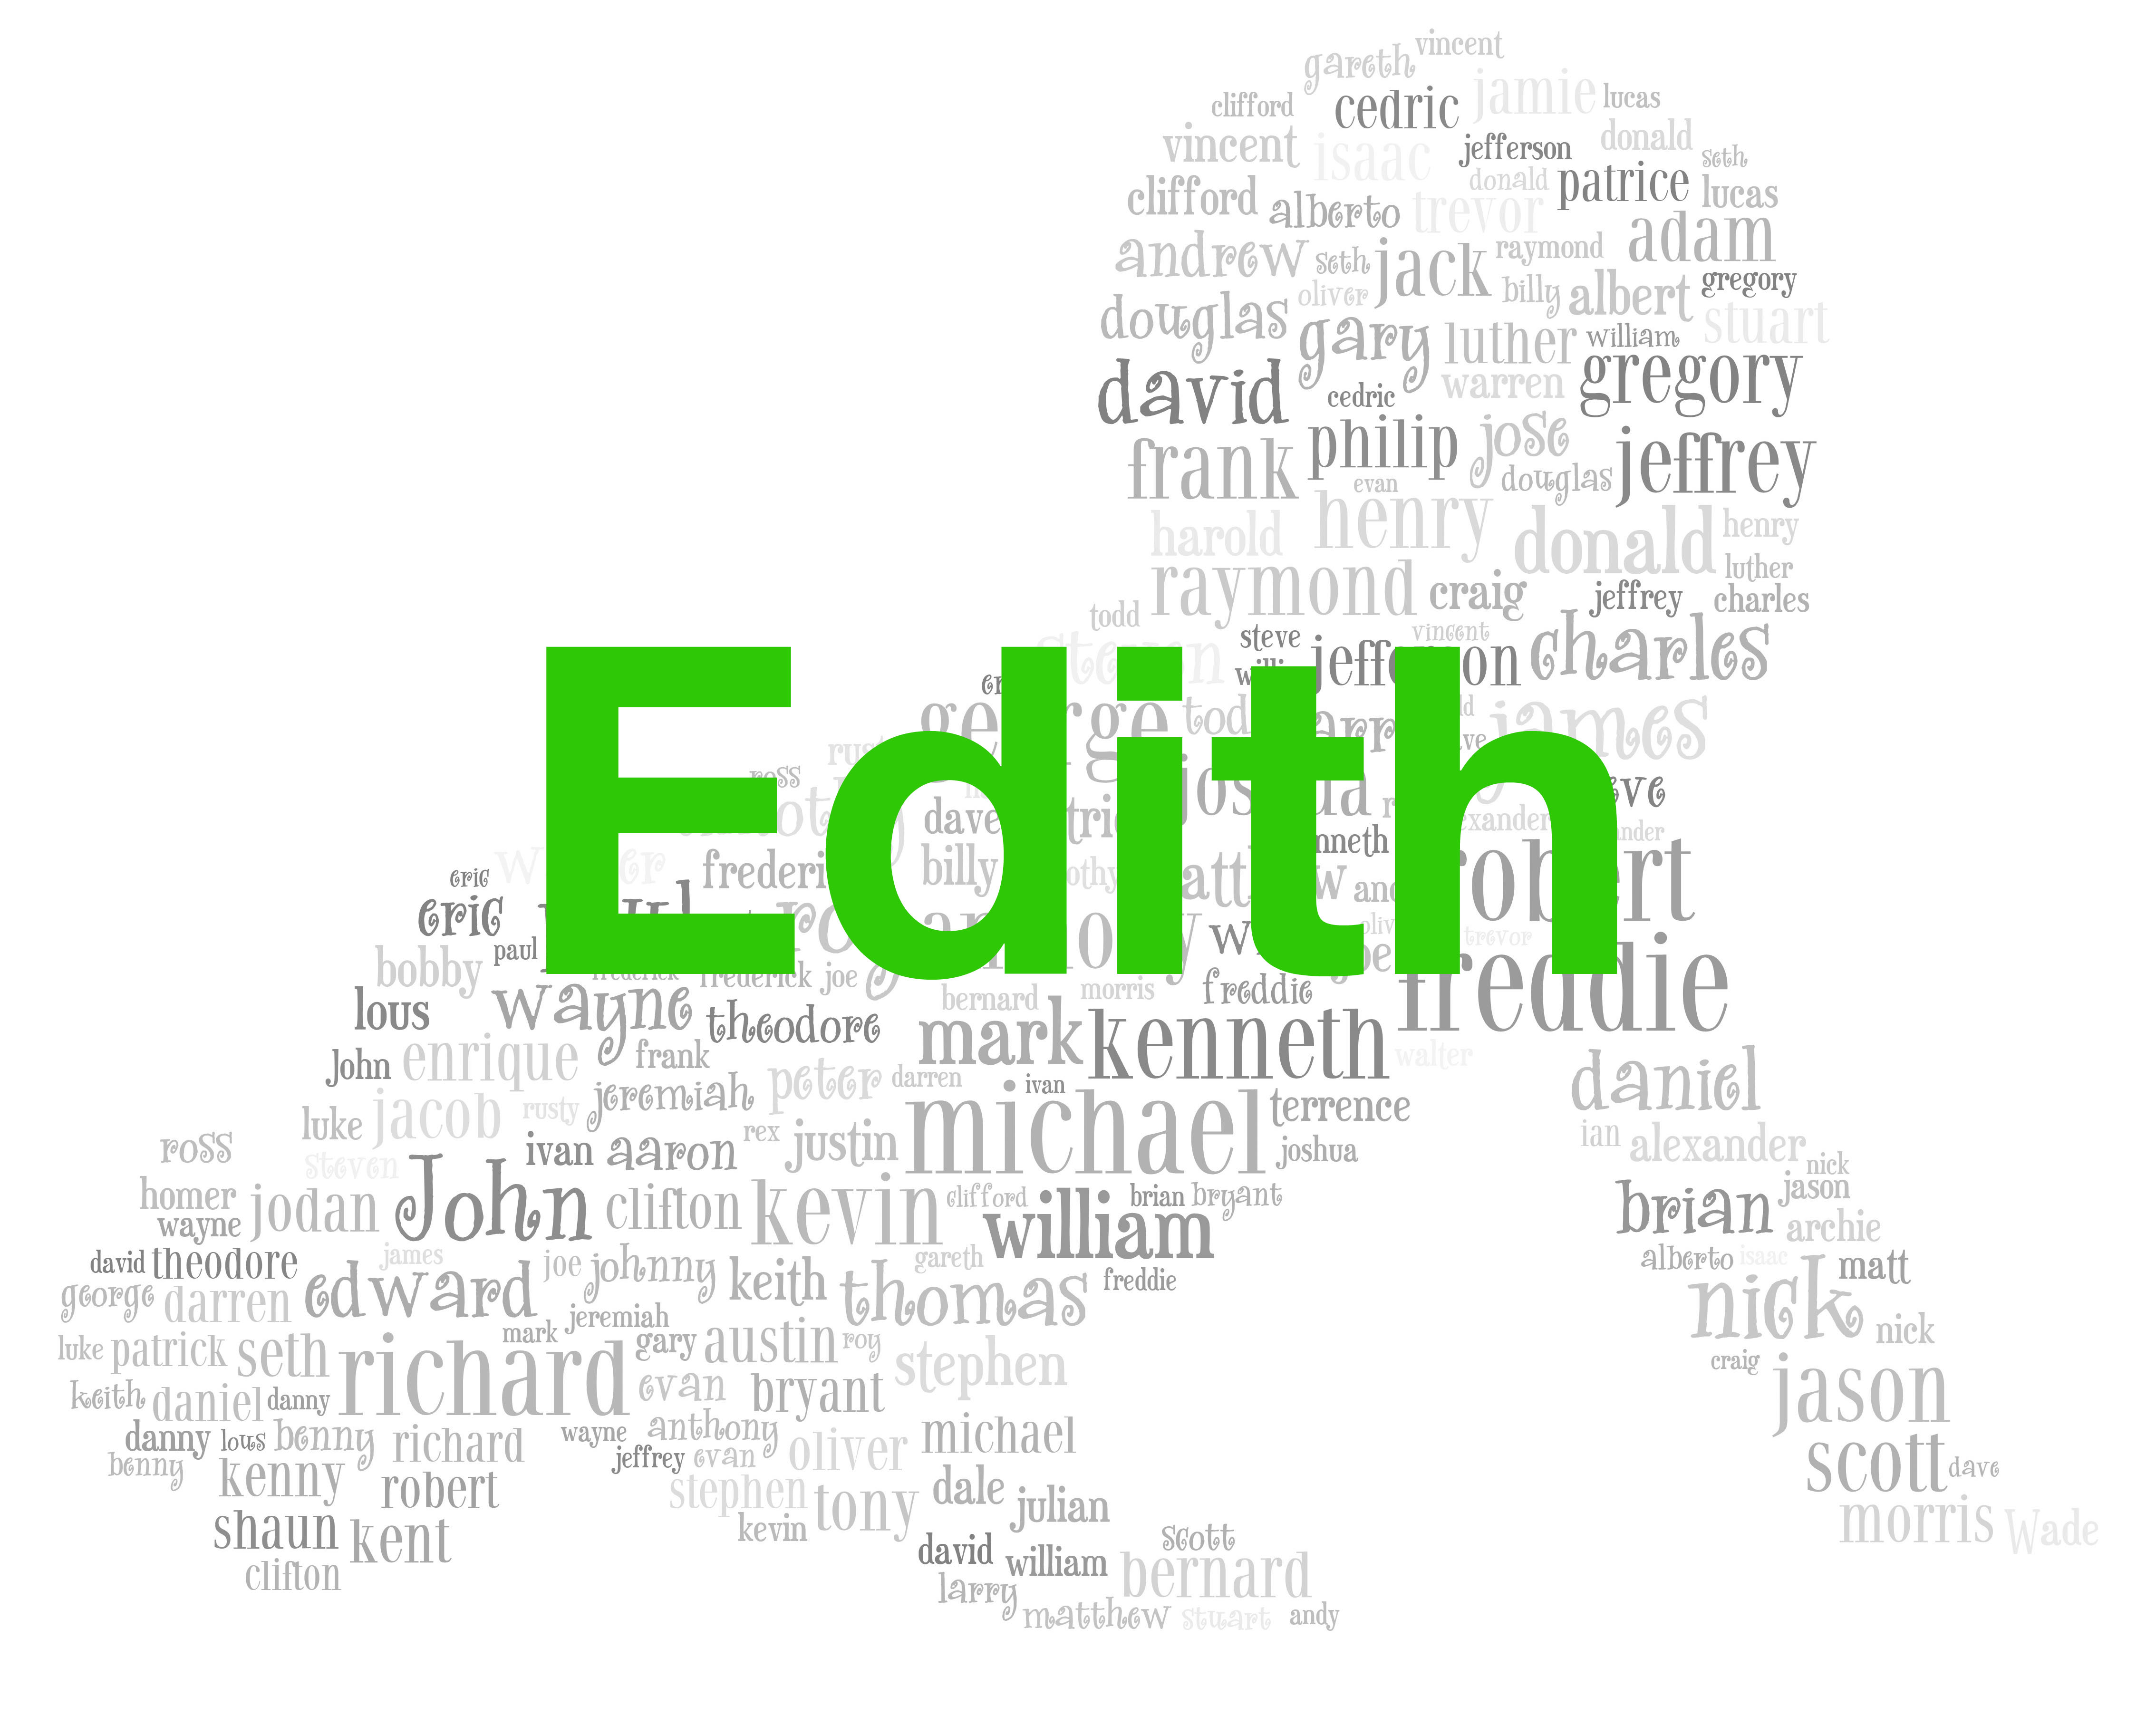 Girls: Edith